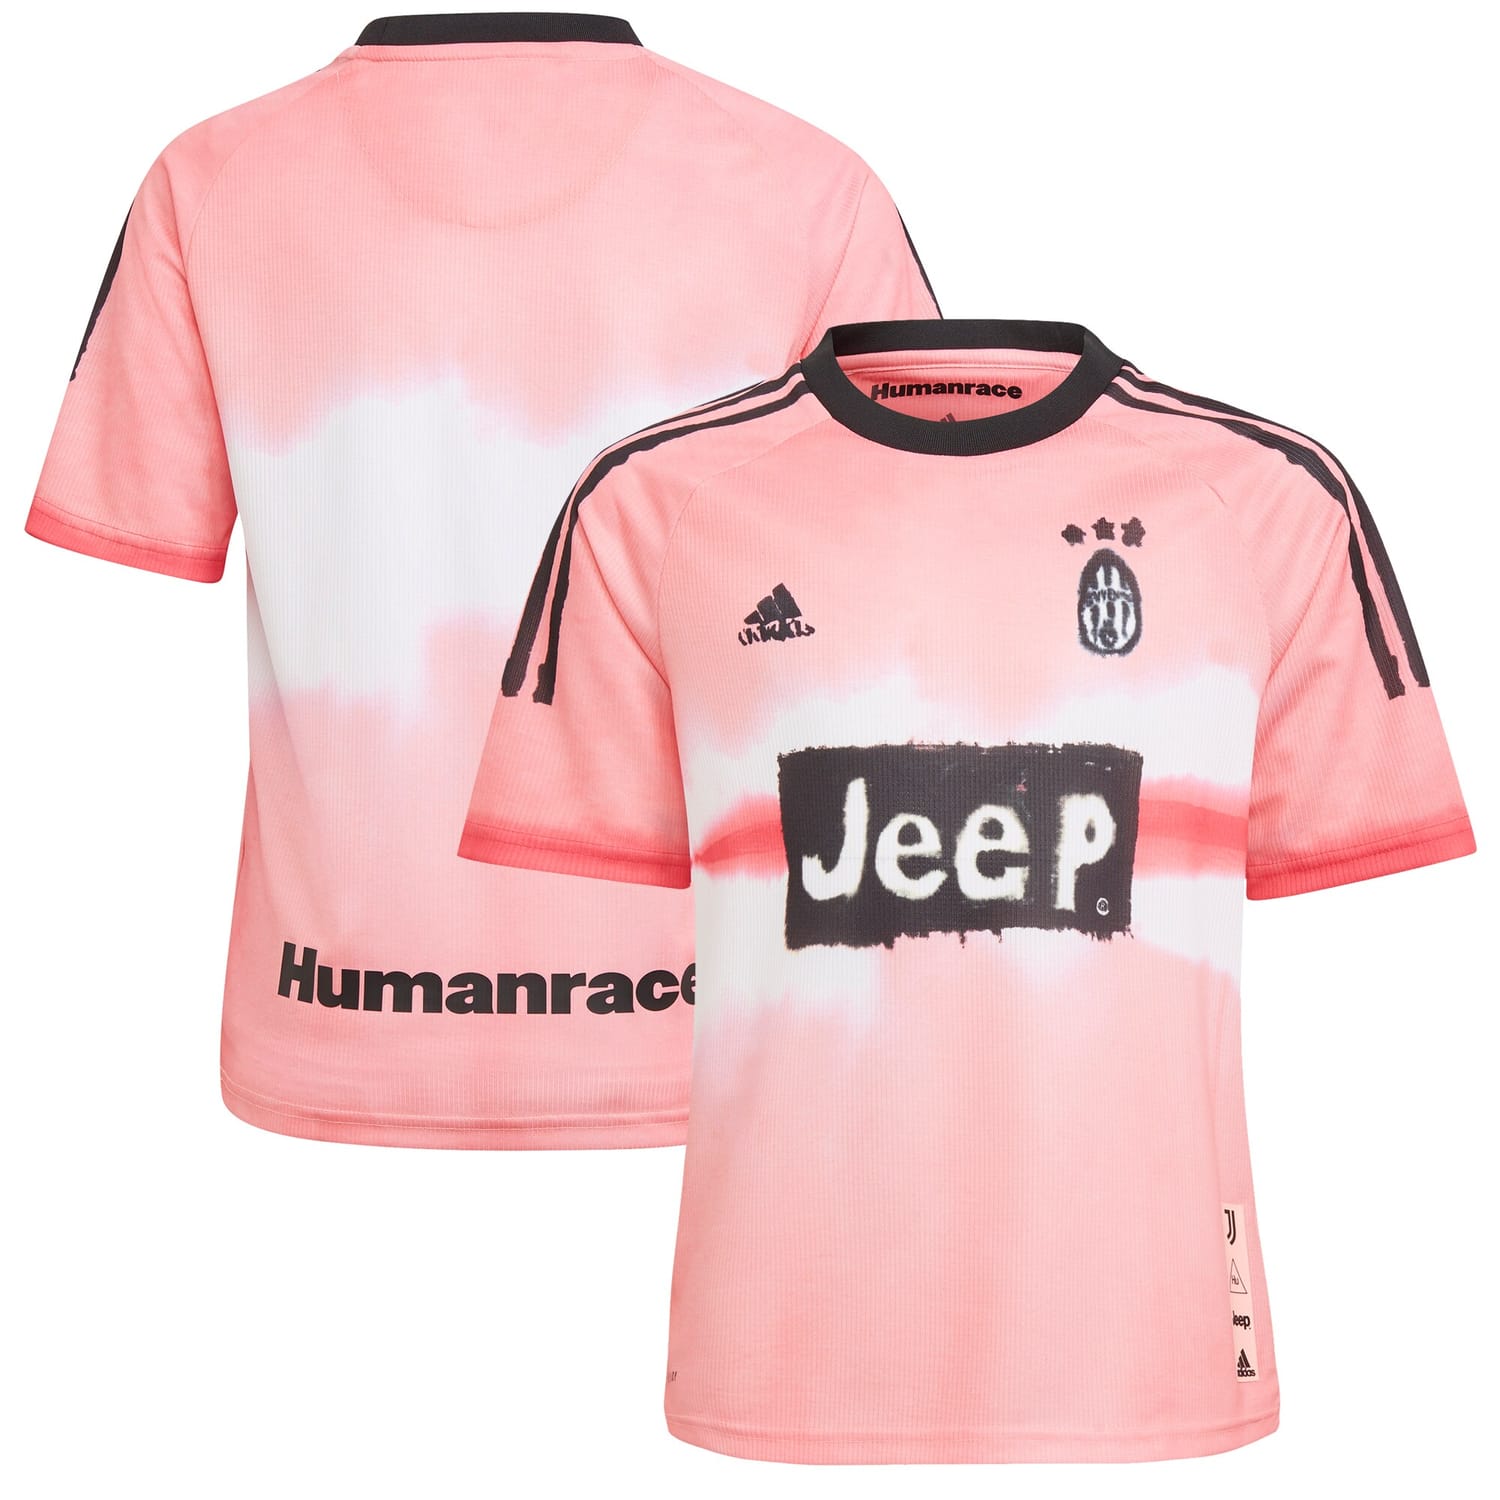 Serie A Juventus Jersey Shirt Pink for Men